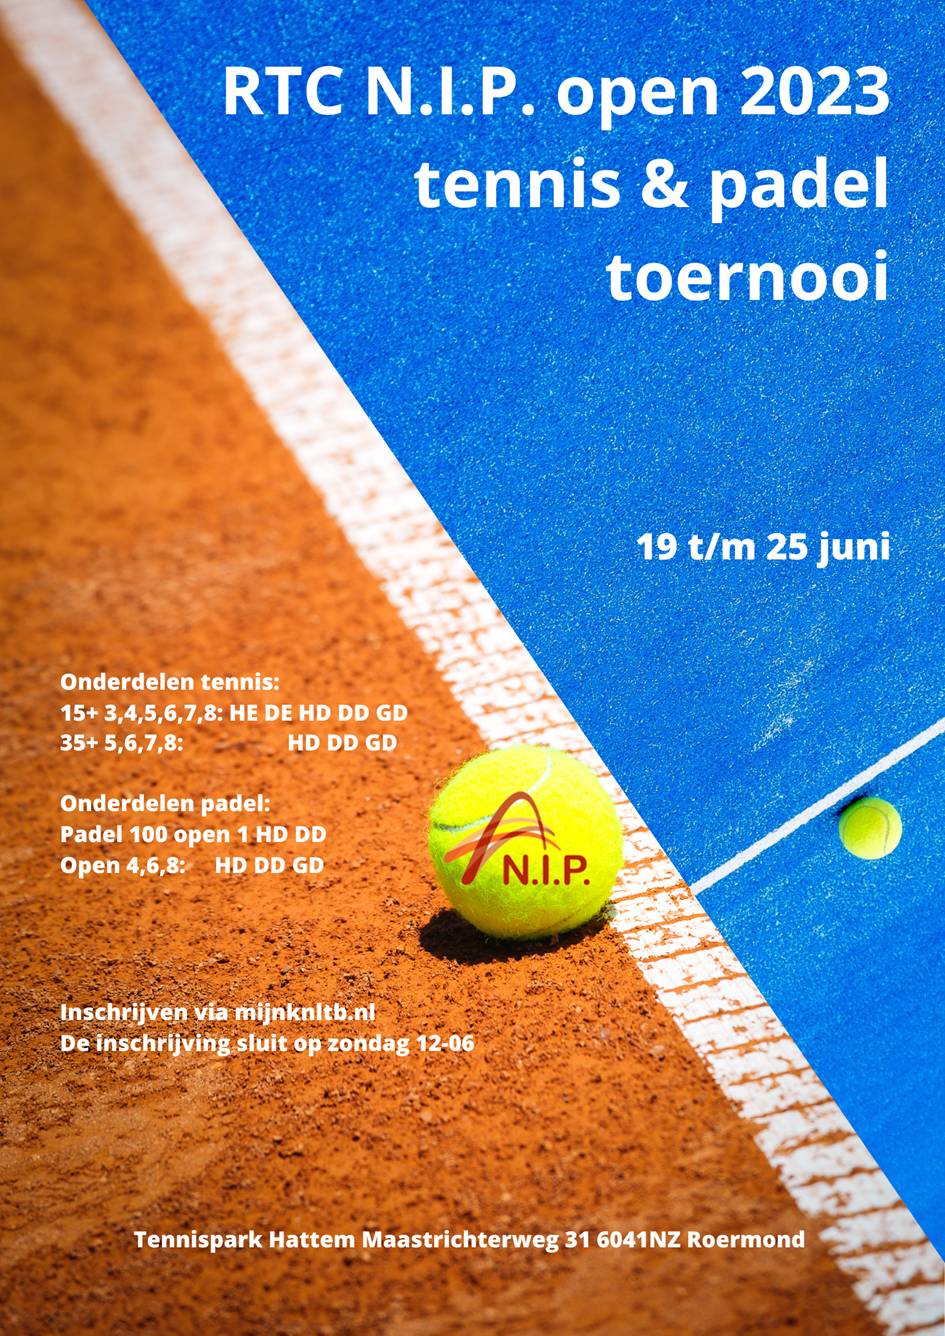 RTC N.I.P. open 2023 tennis & padel (1).png